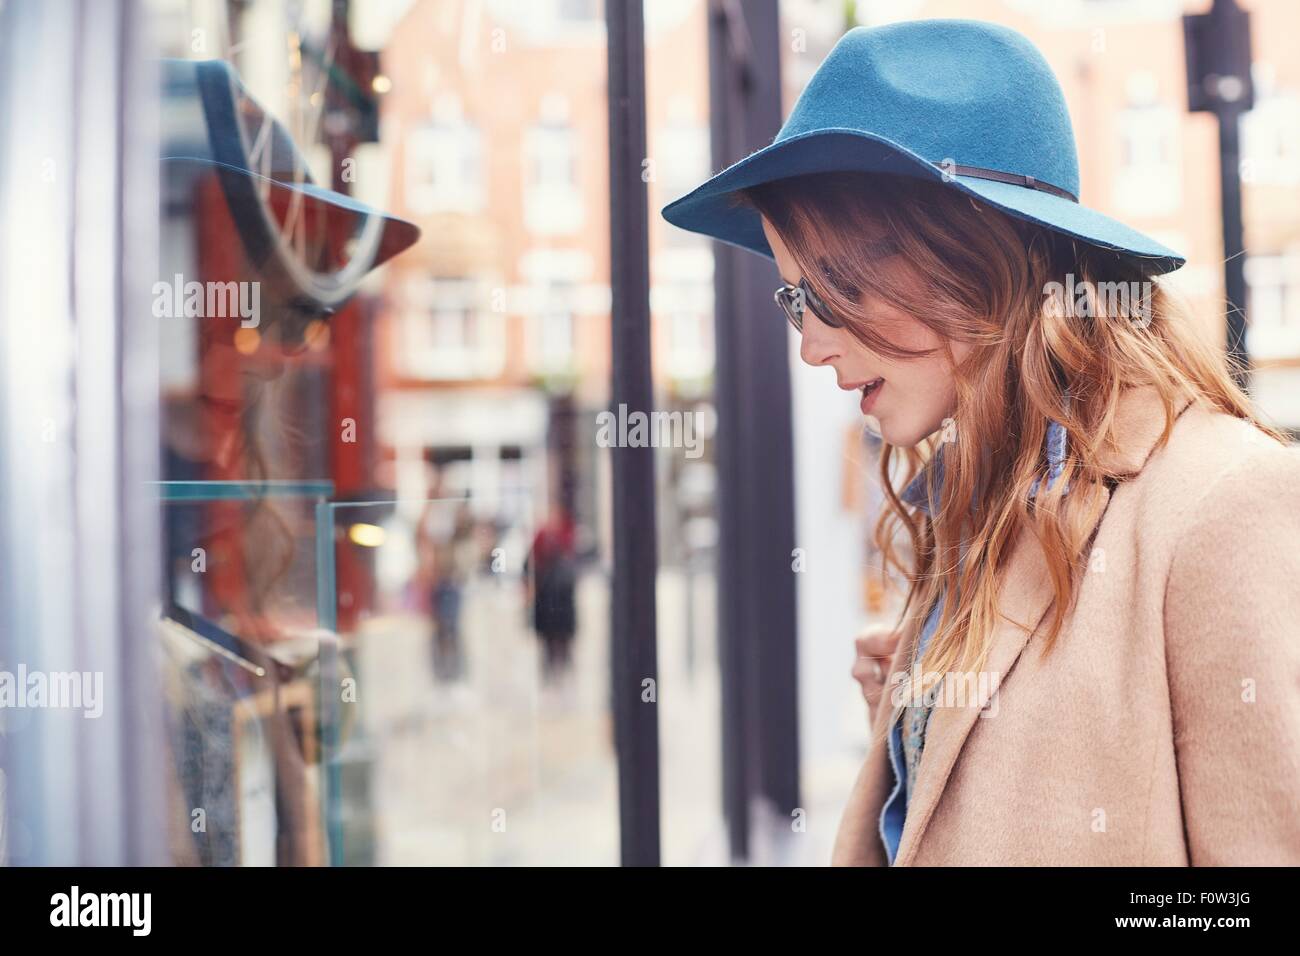 Elegante joven shopper mirando escaparates, Londres, Reino Unido. Foto de stock